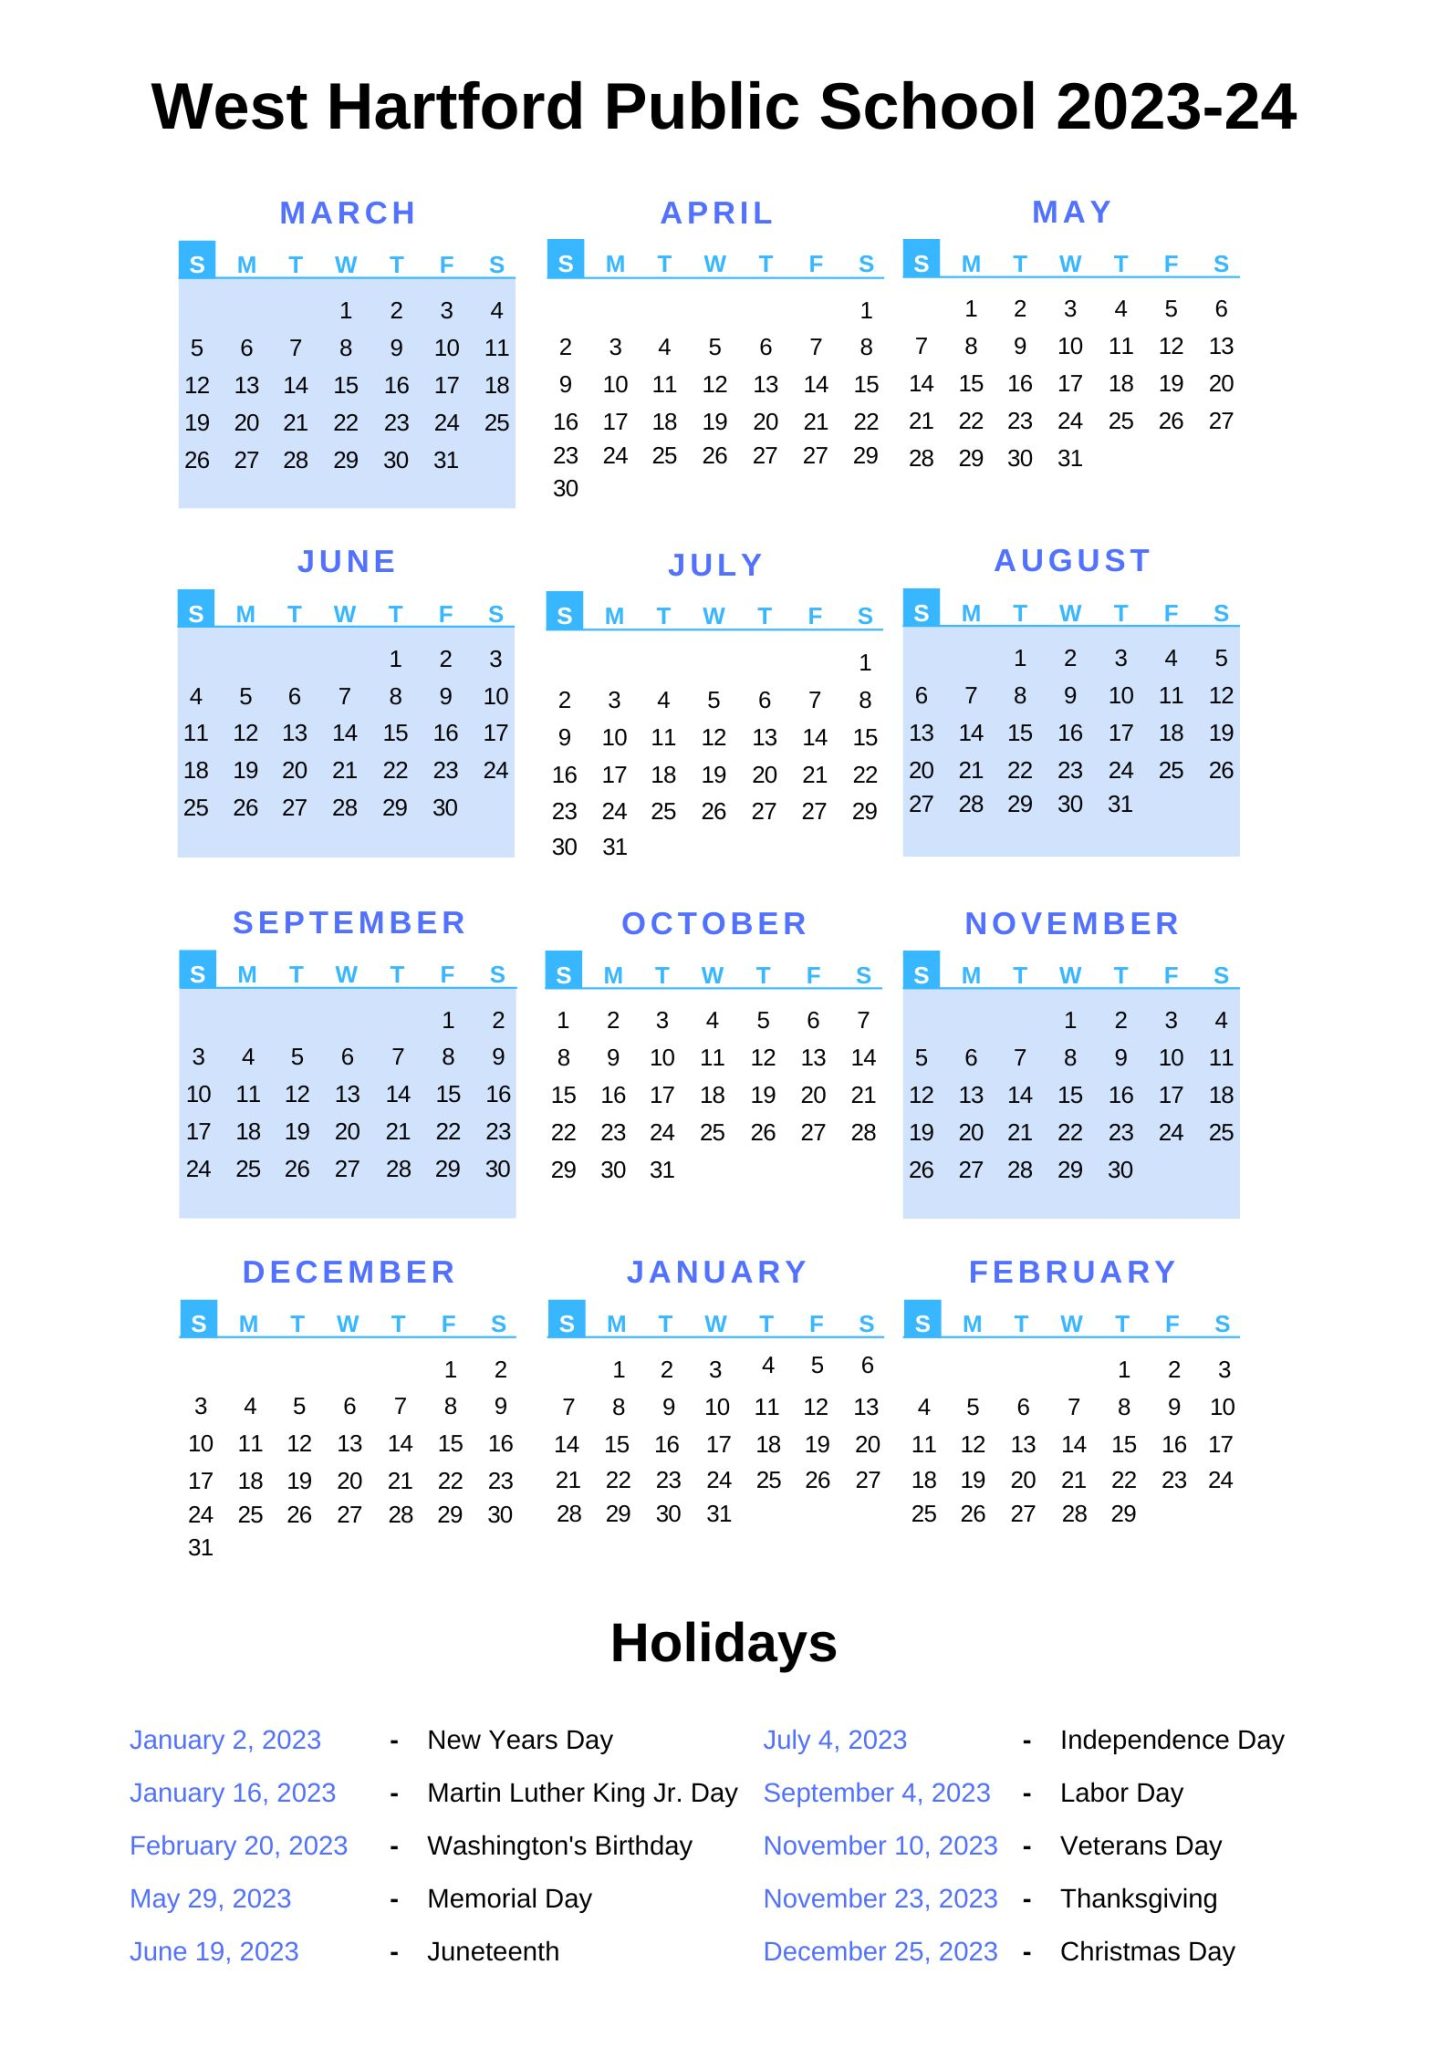 West Hartford Public Schools Calendar 202324 With Holidays